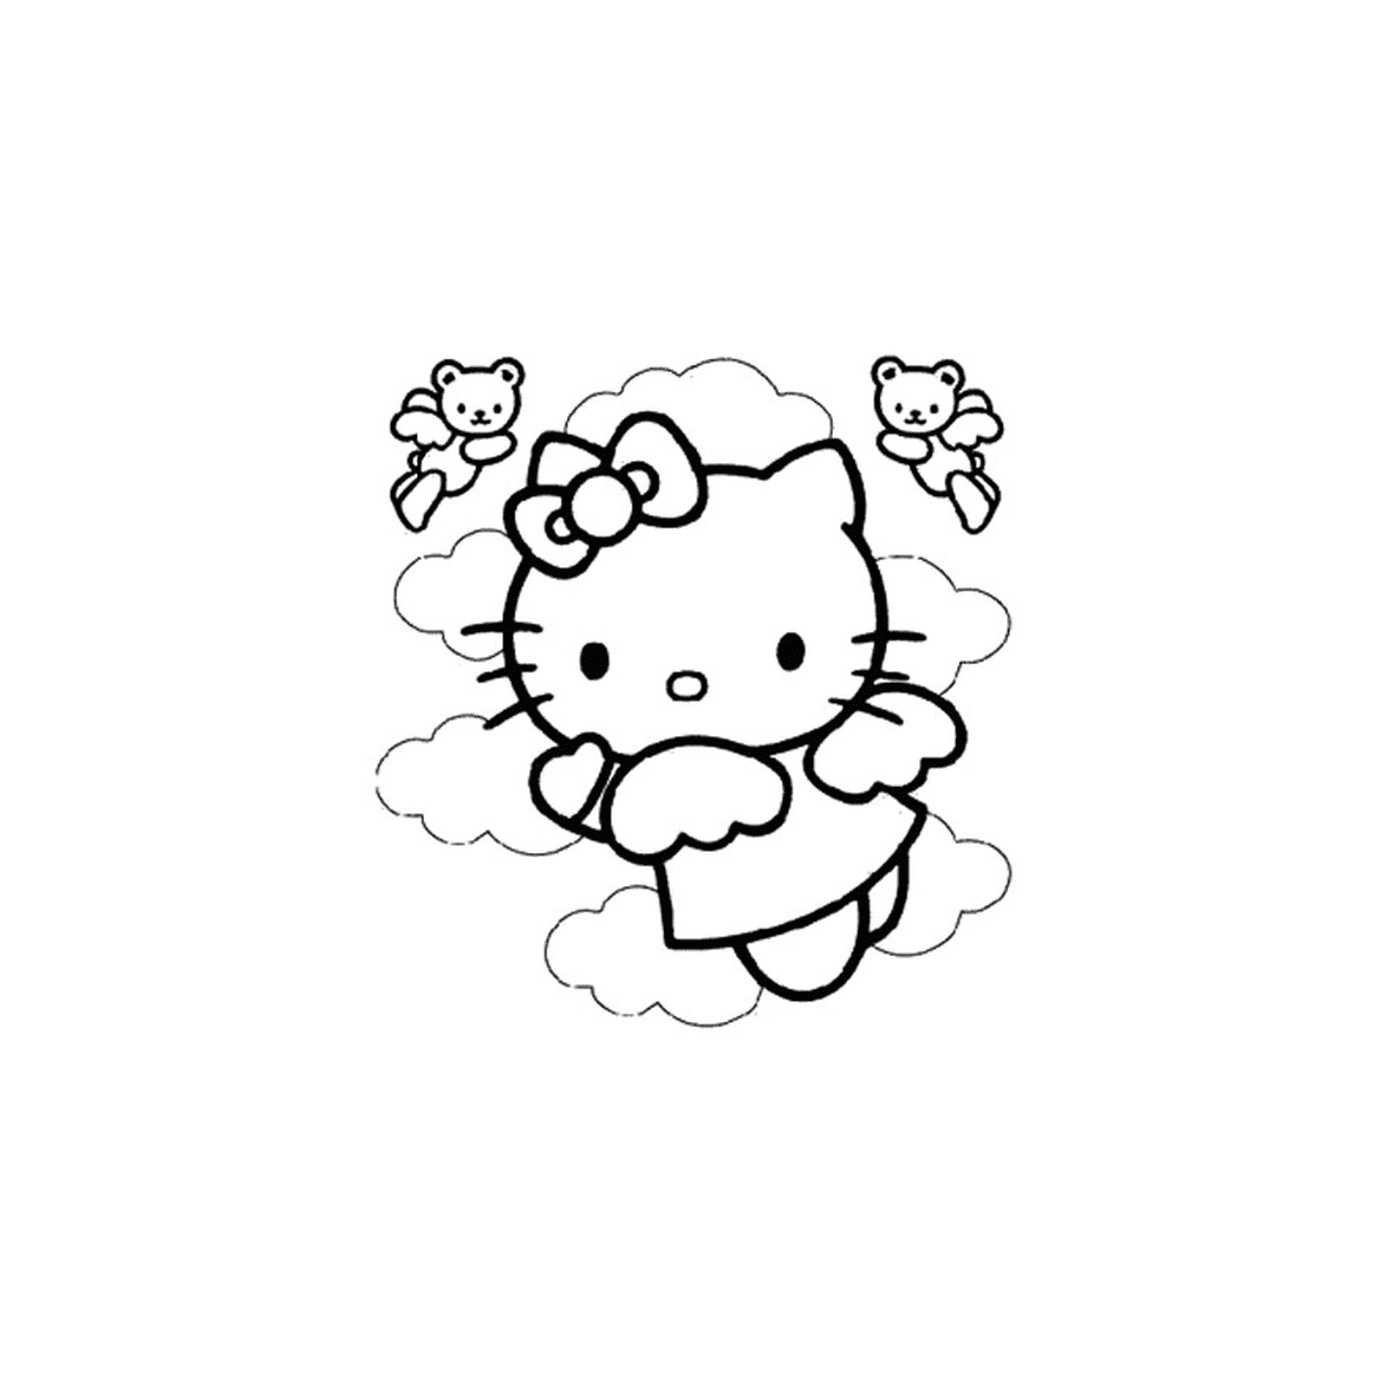   Hello Kitty volant dans les airs 